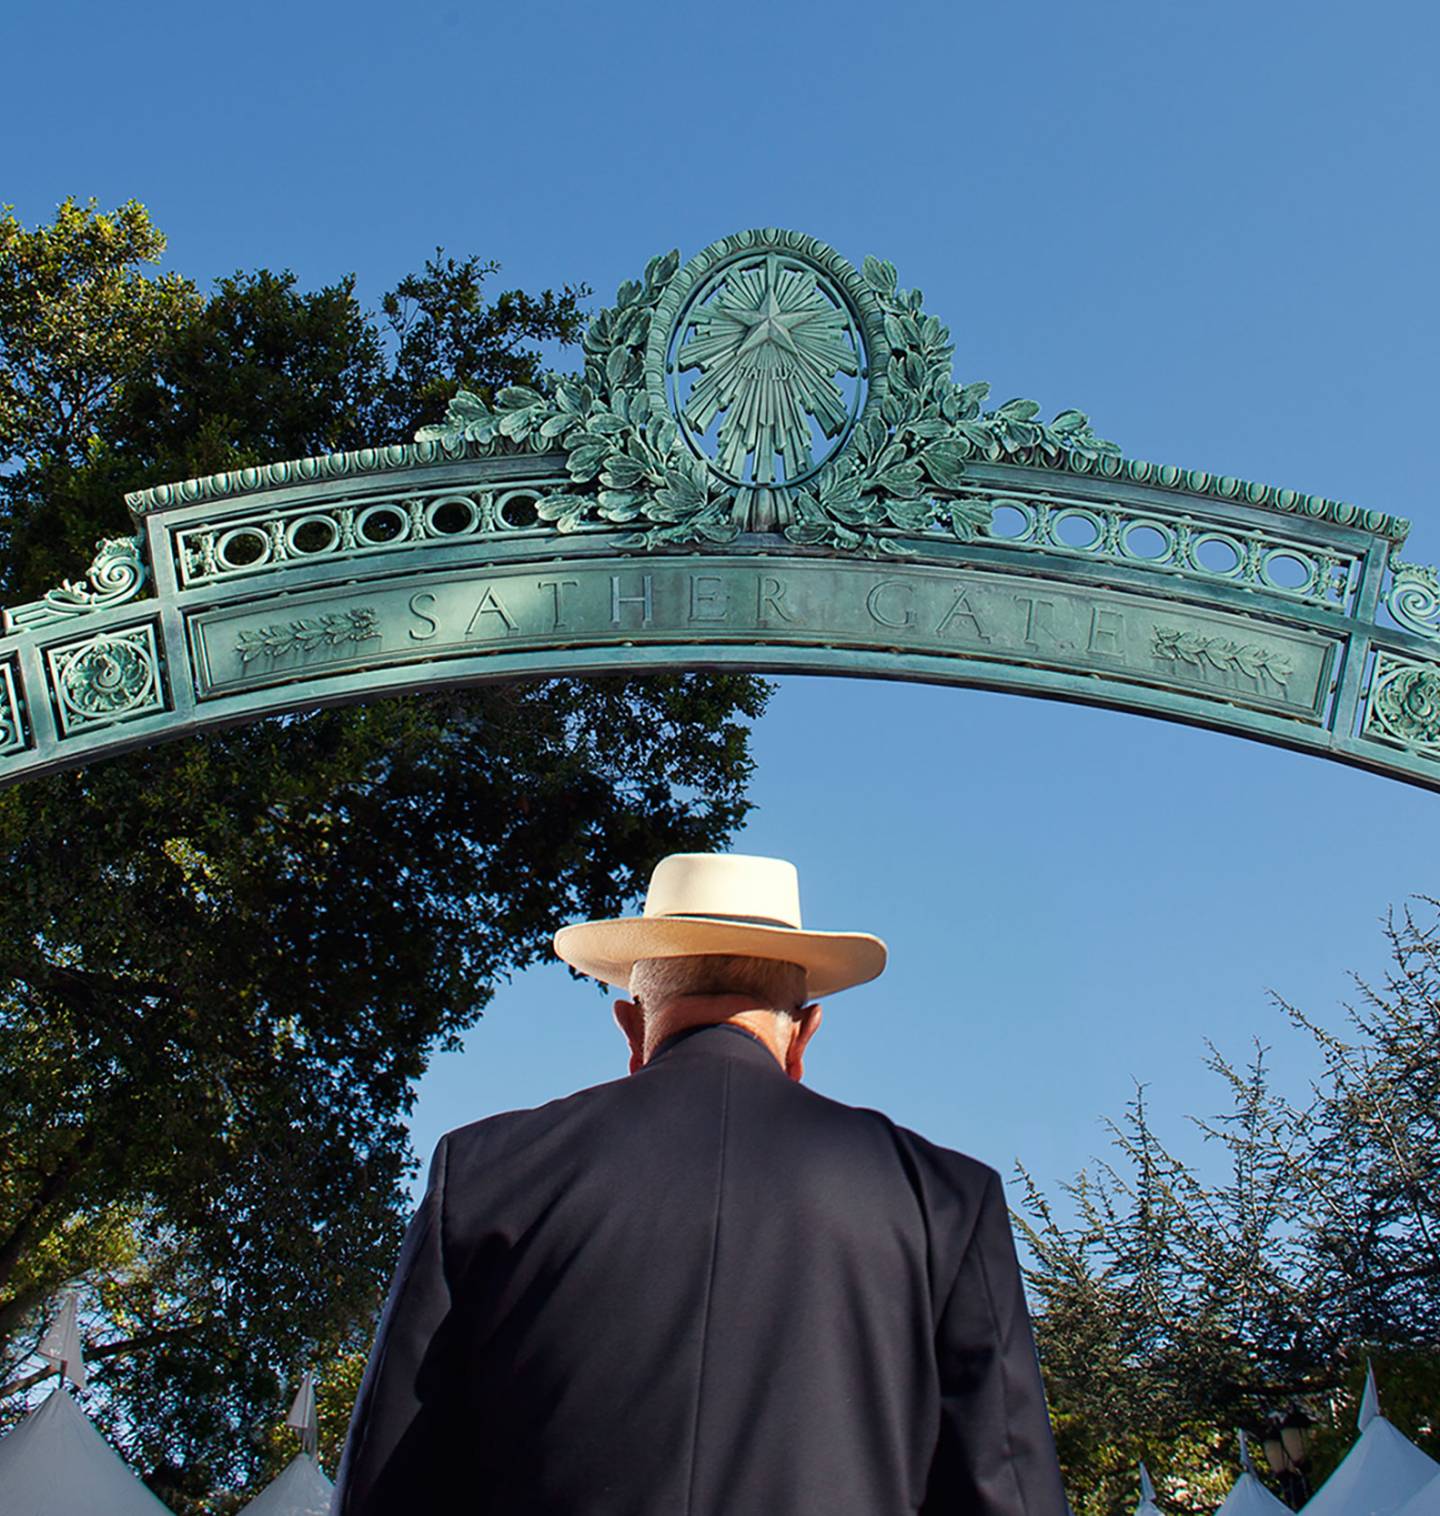 UC Berkeley's Sather Gate